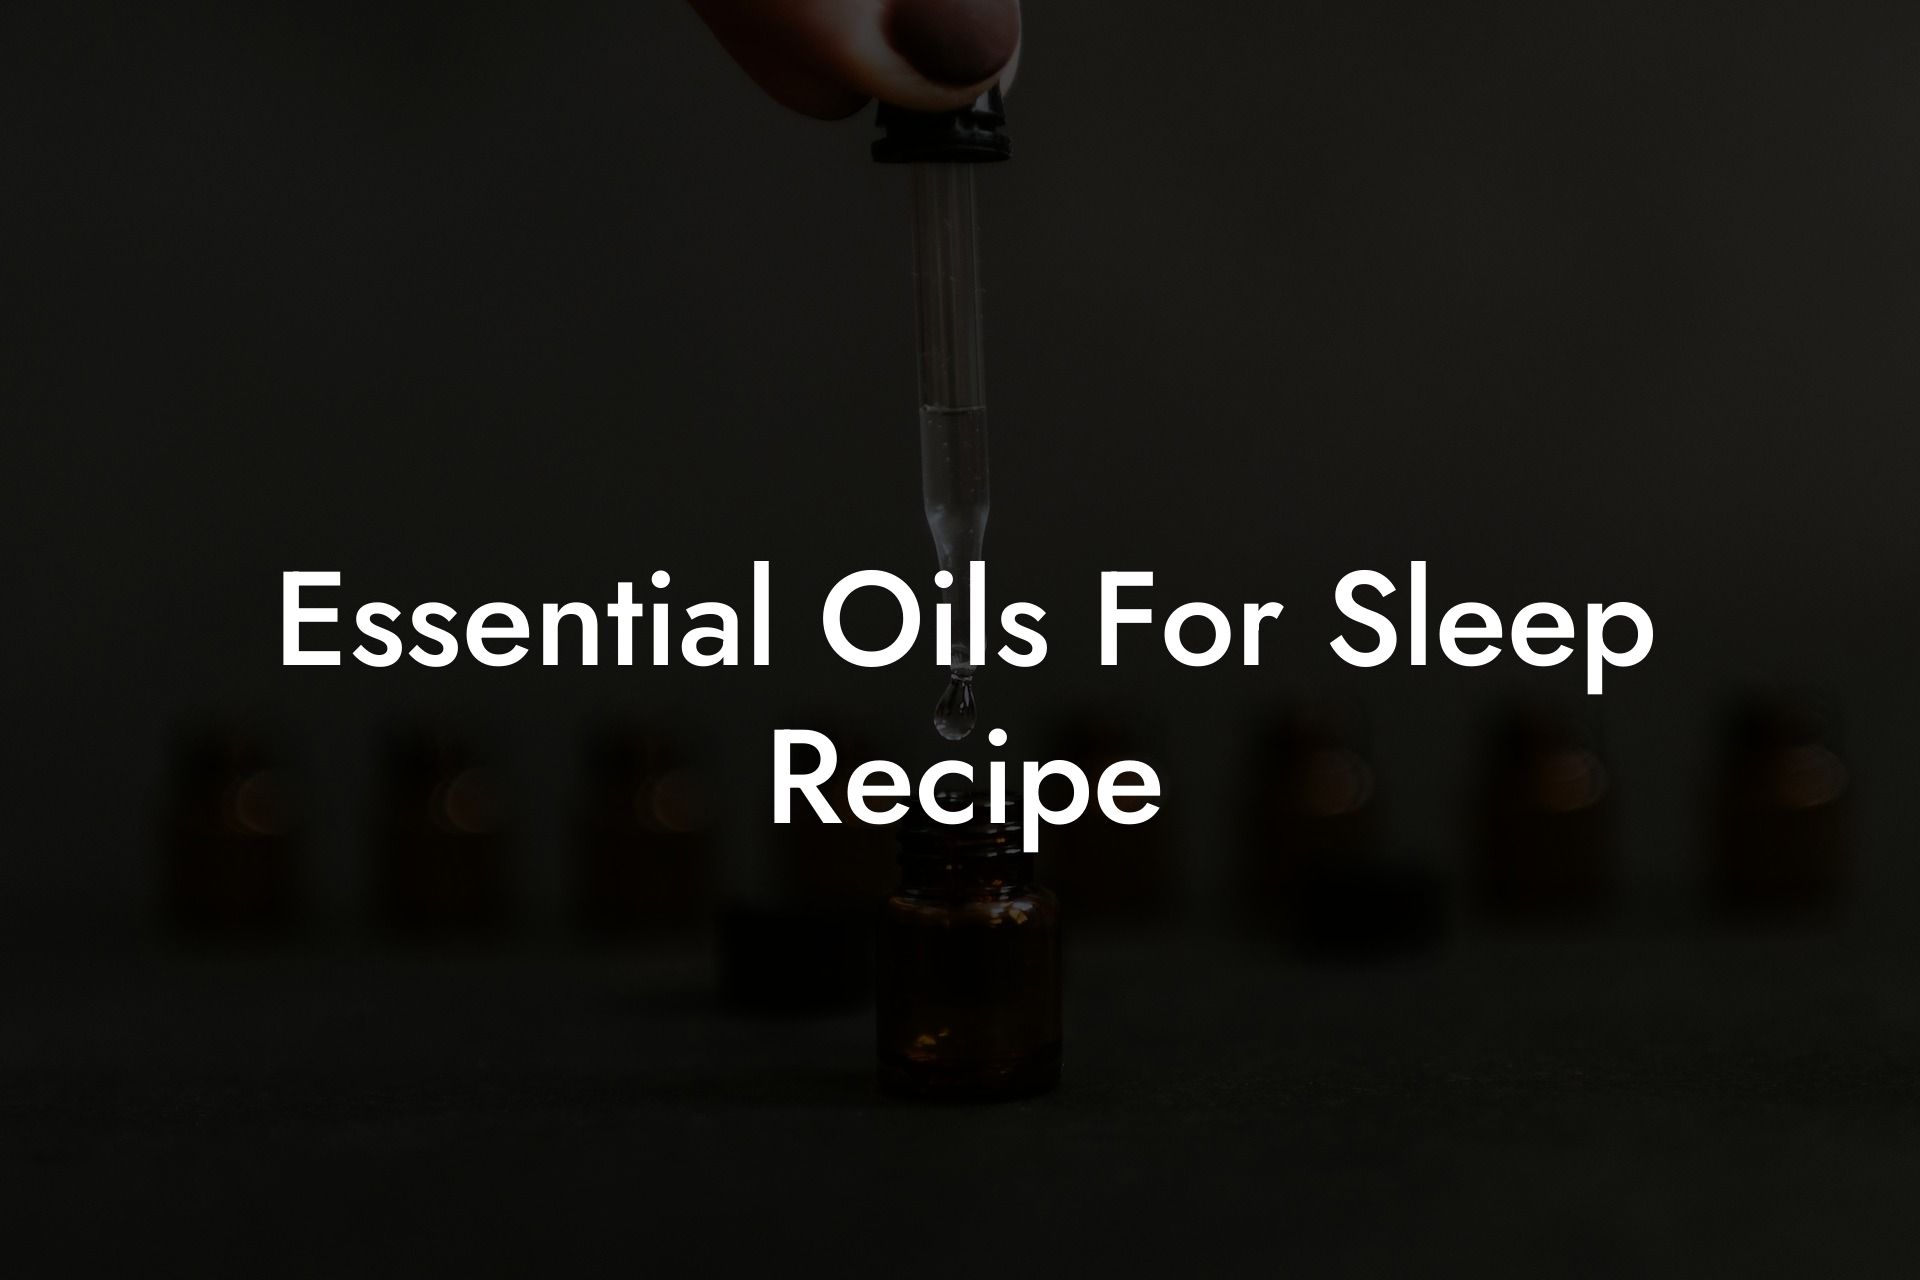 Essential Oils For Sleep Recipe